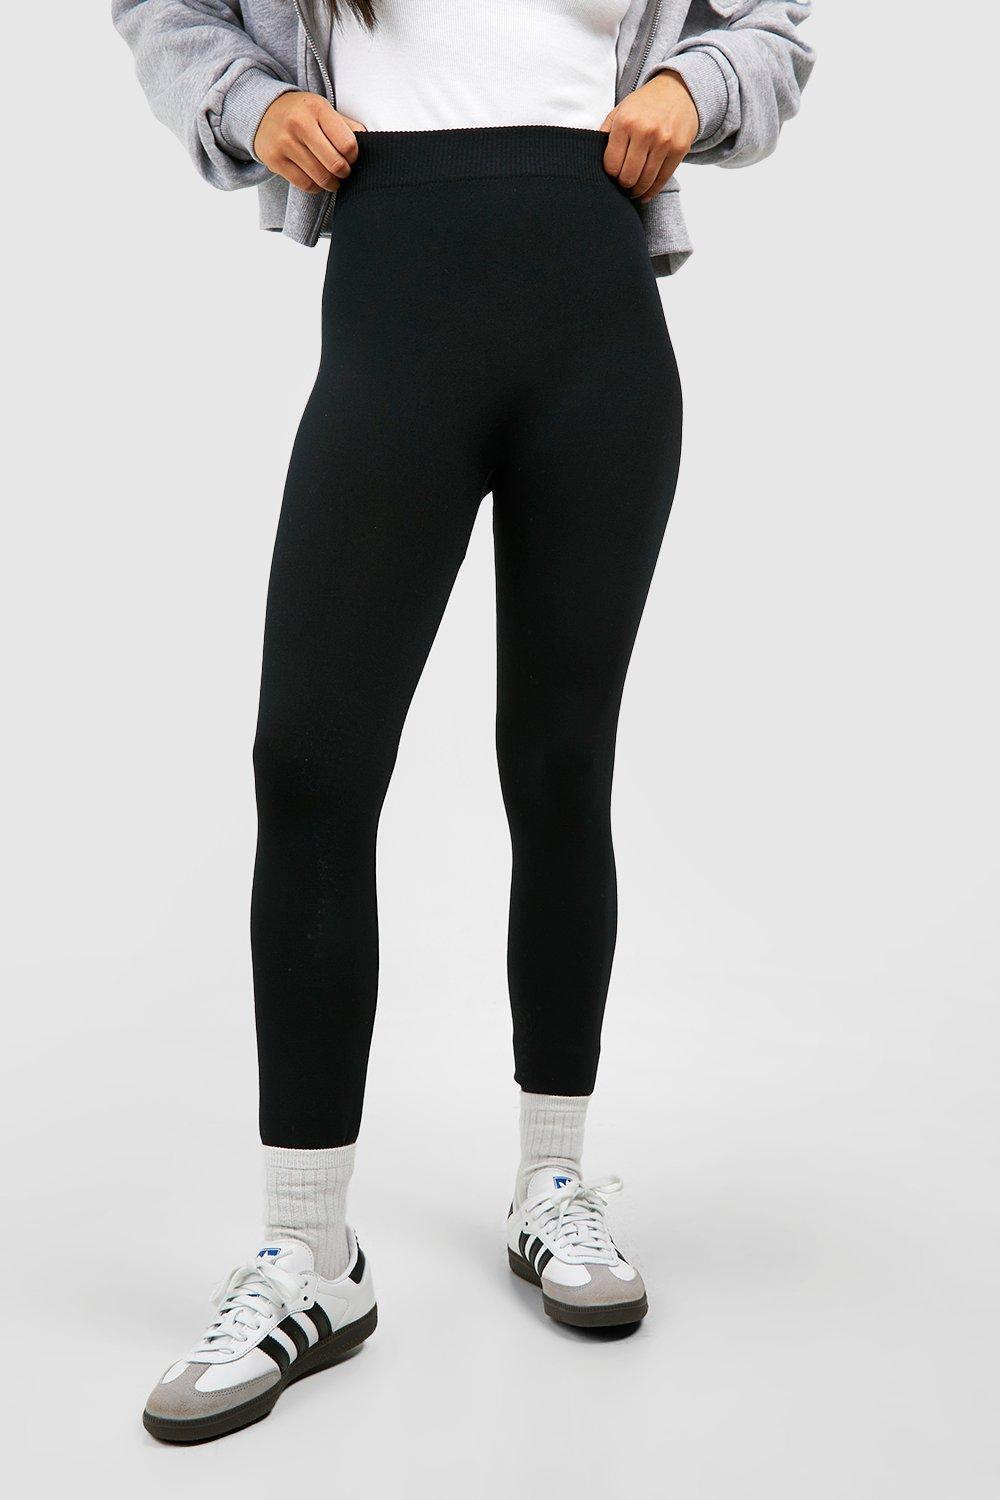 Plush Women's Fleece Lined Yoga Leggings, Black, X-Small : :  Clothing, Shoes & Accessories